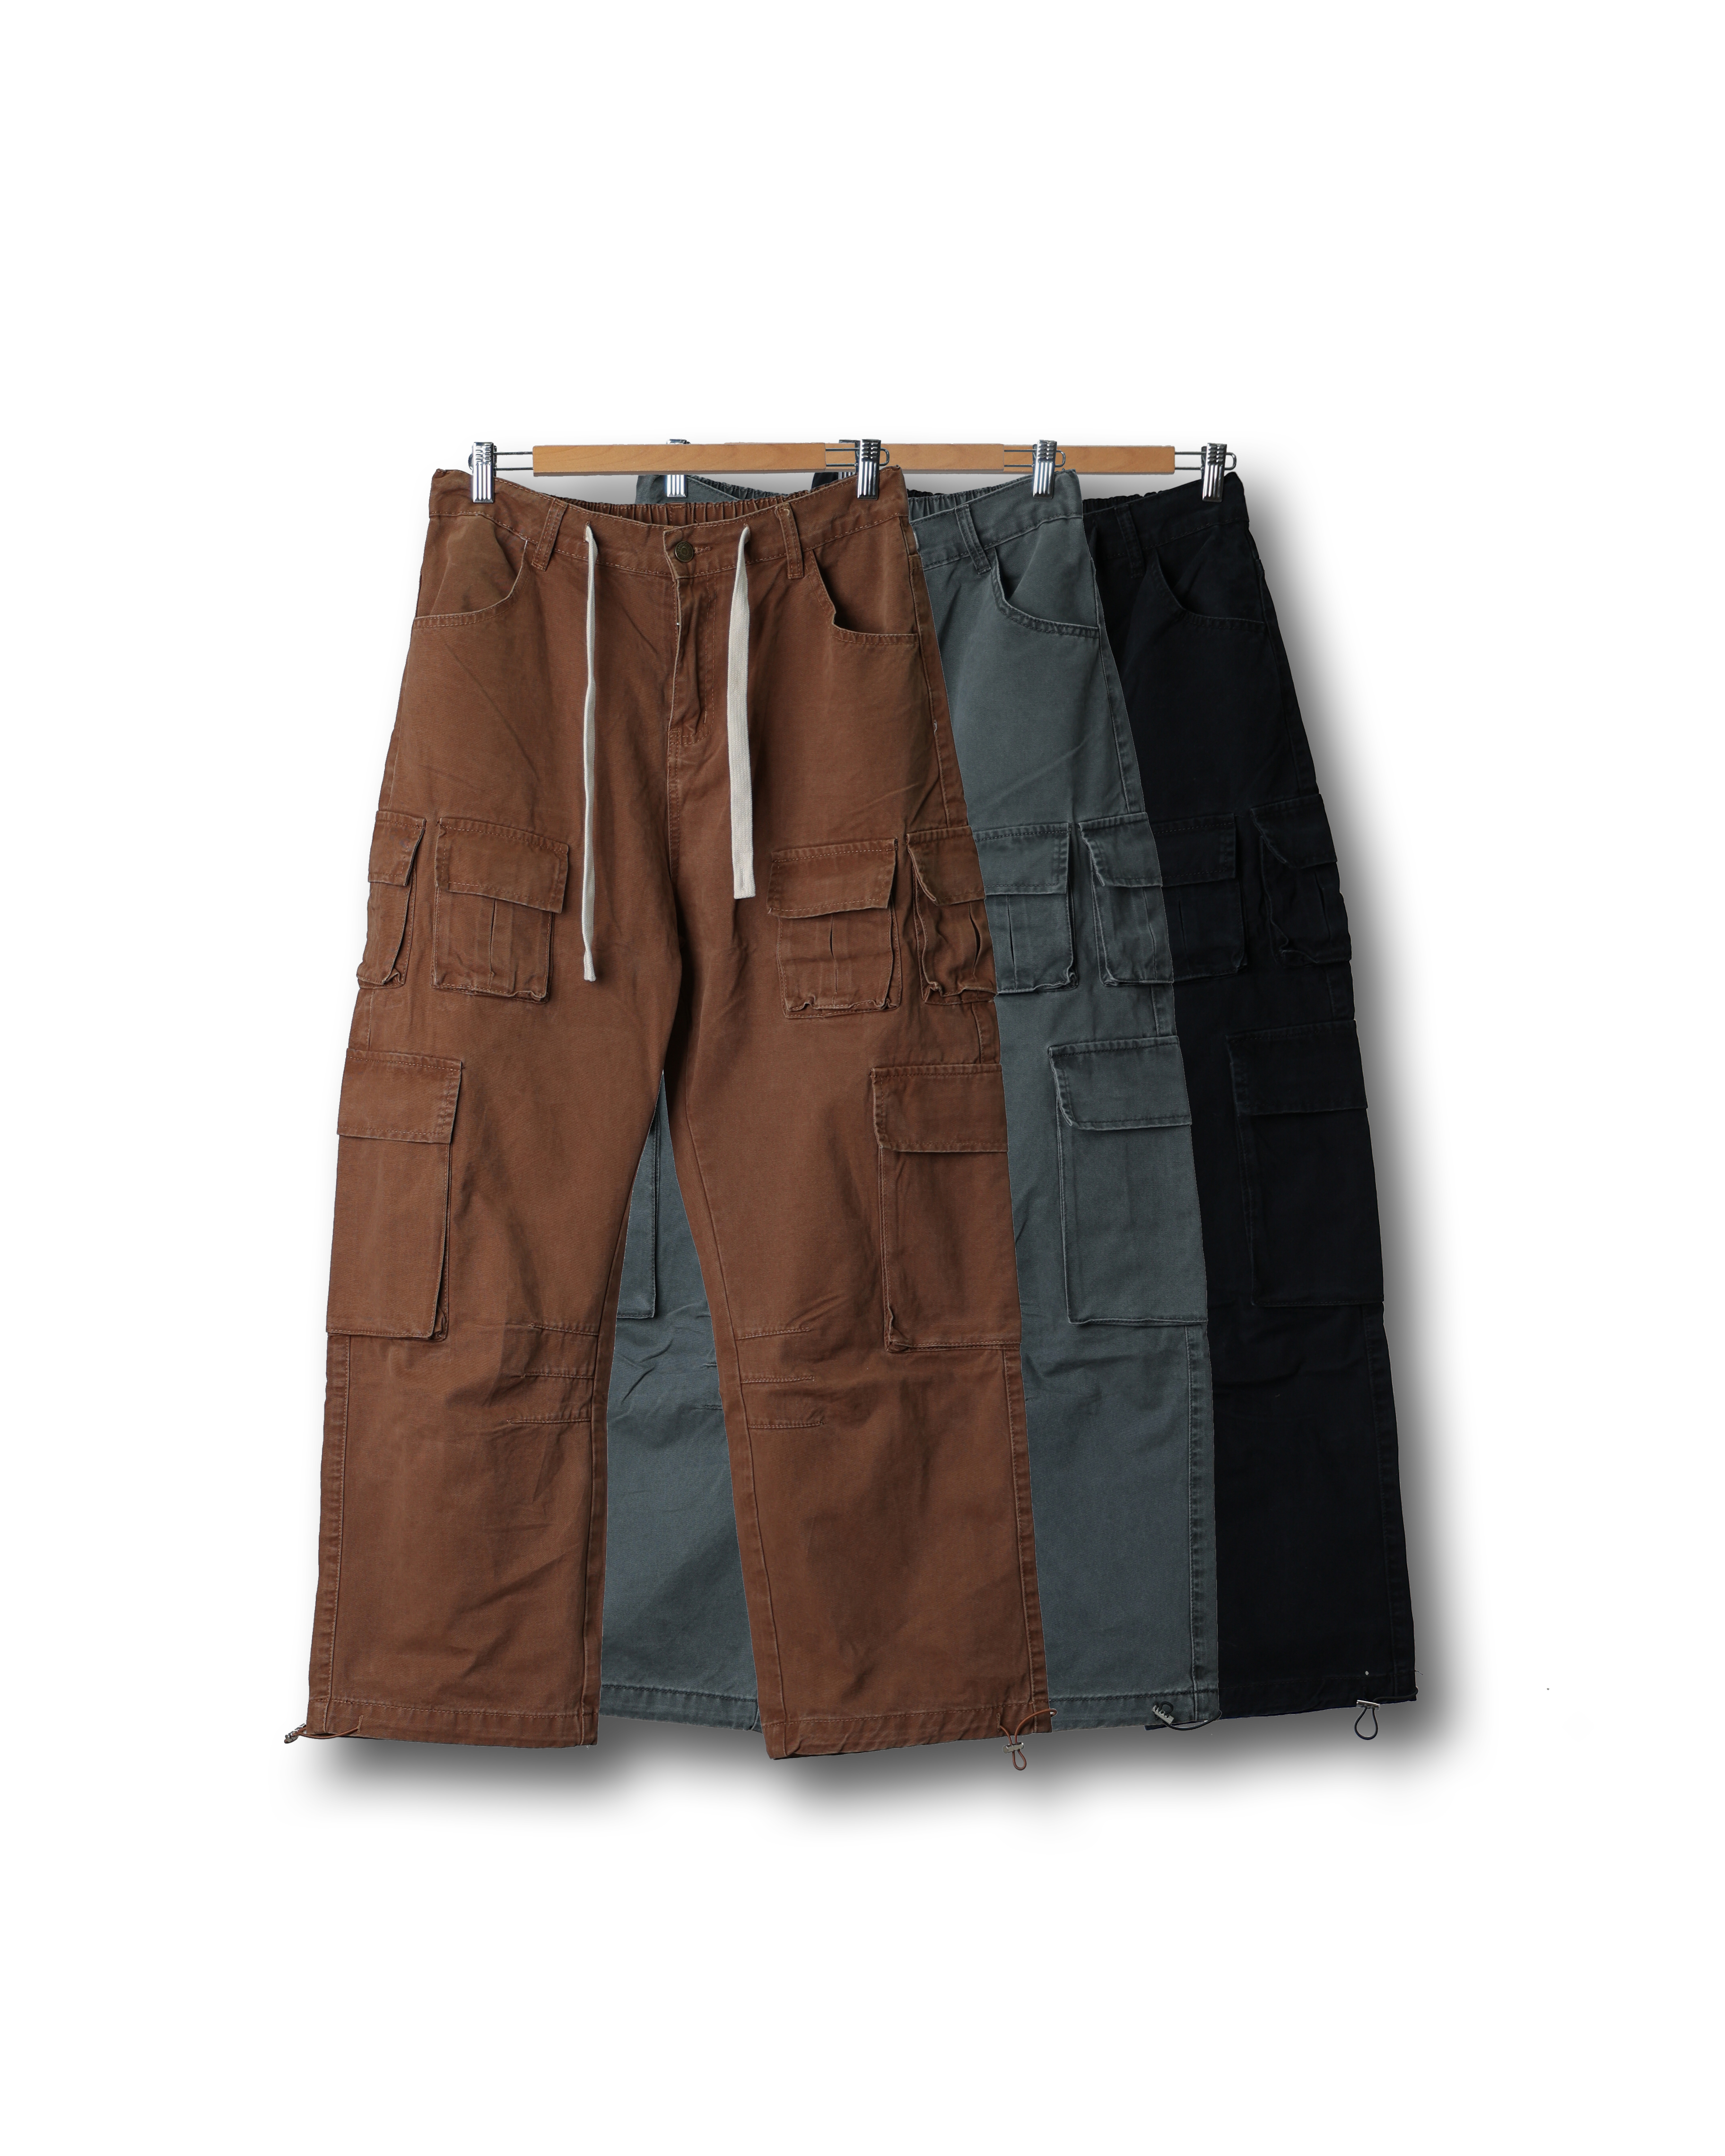 MEG Multi Pocket Washed Cargo Pants (Black/Charcoal Gray/Brown)